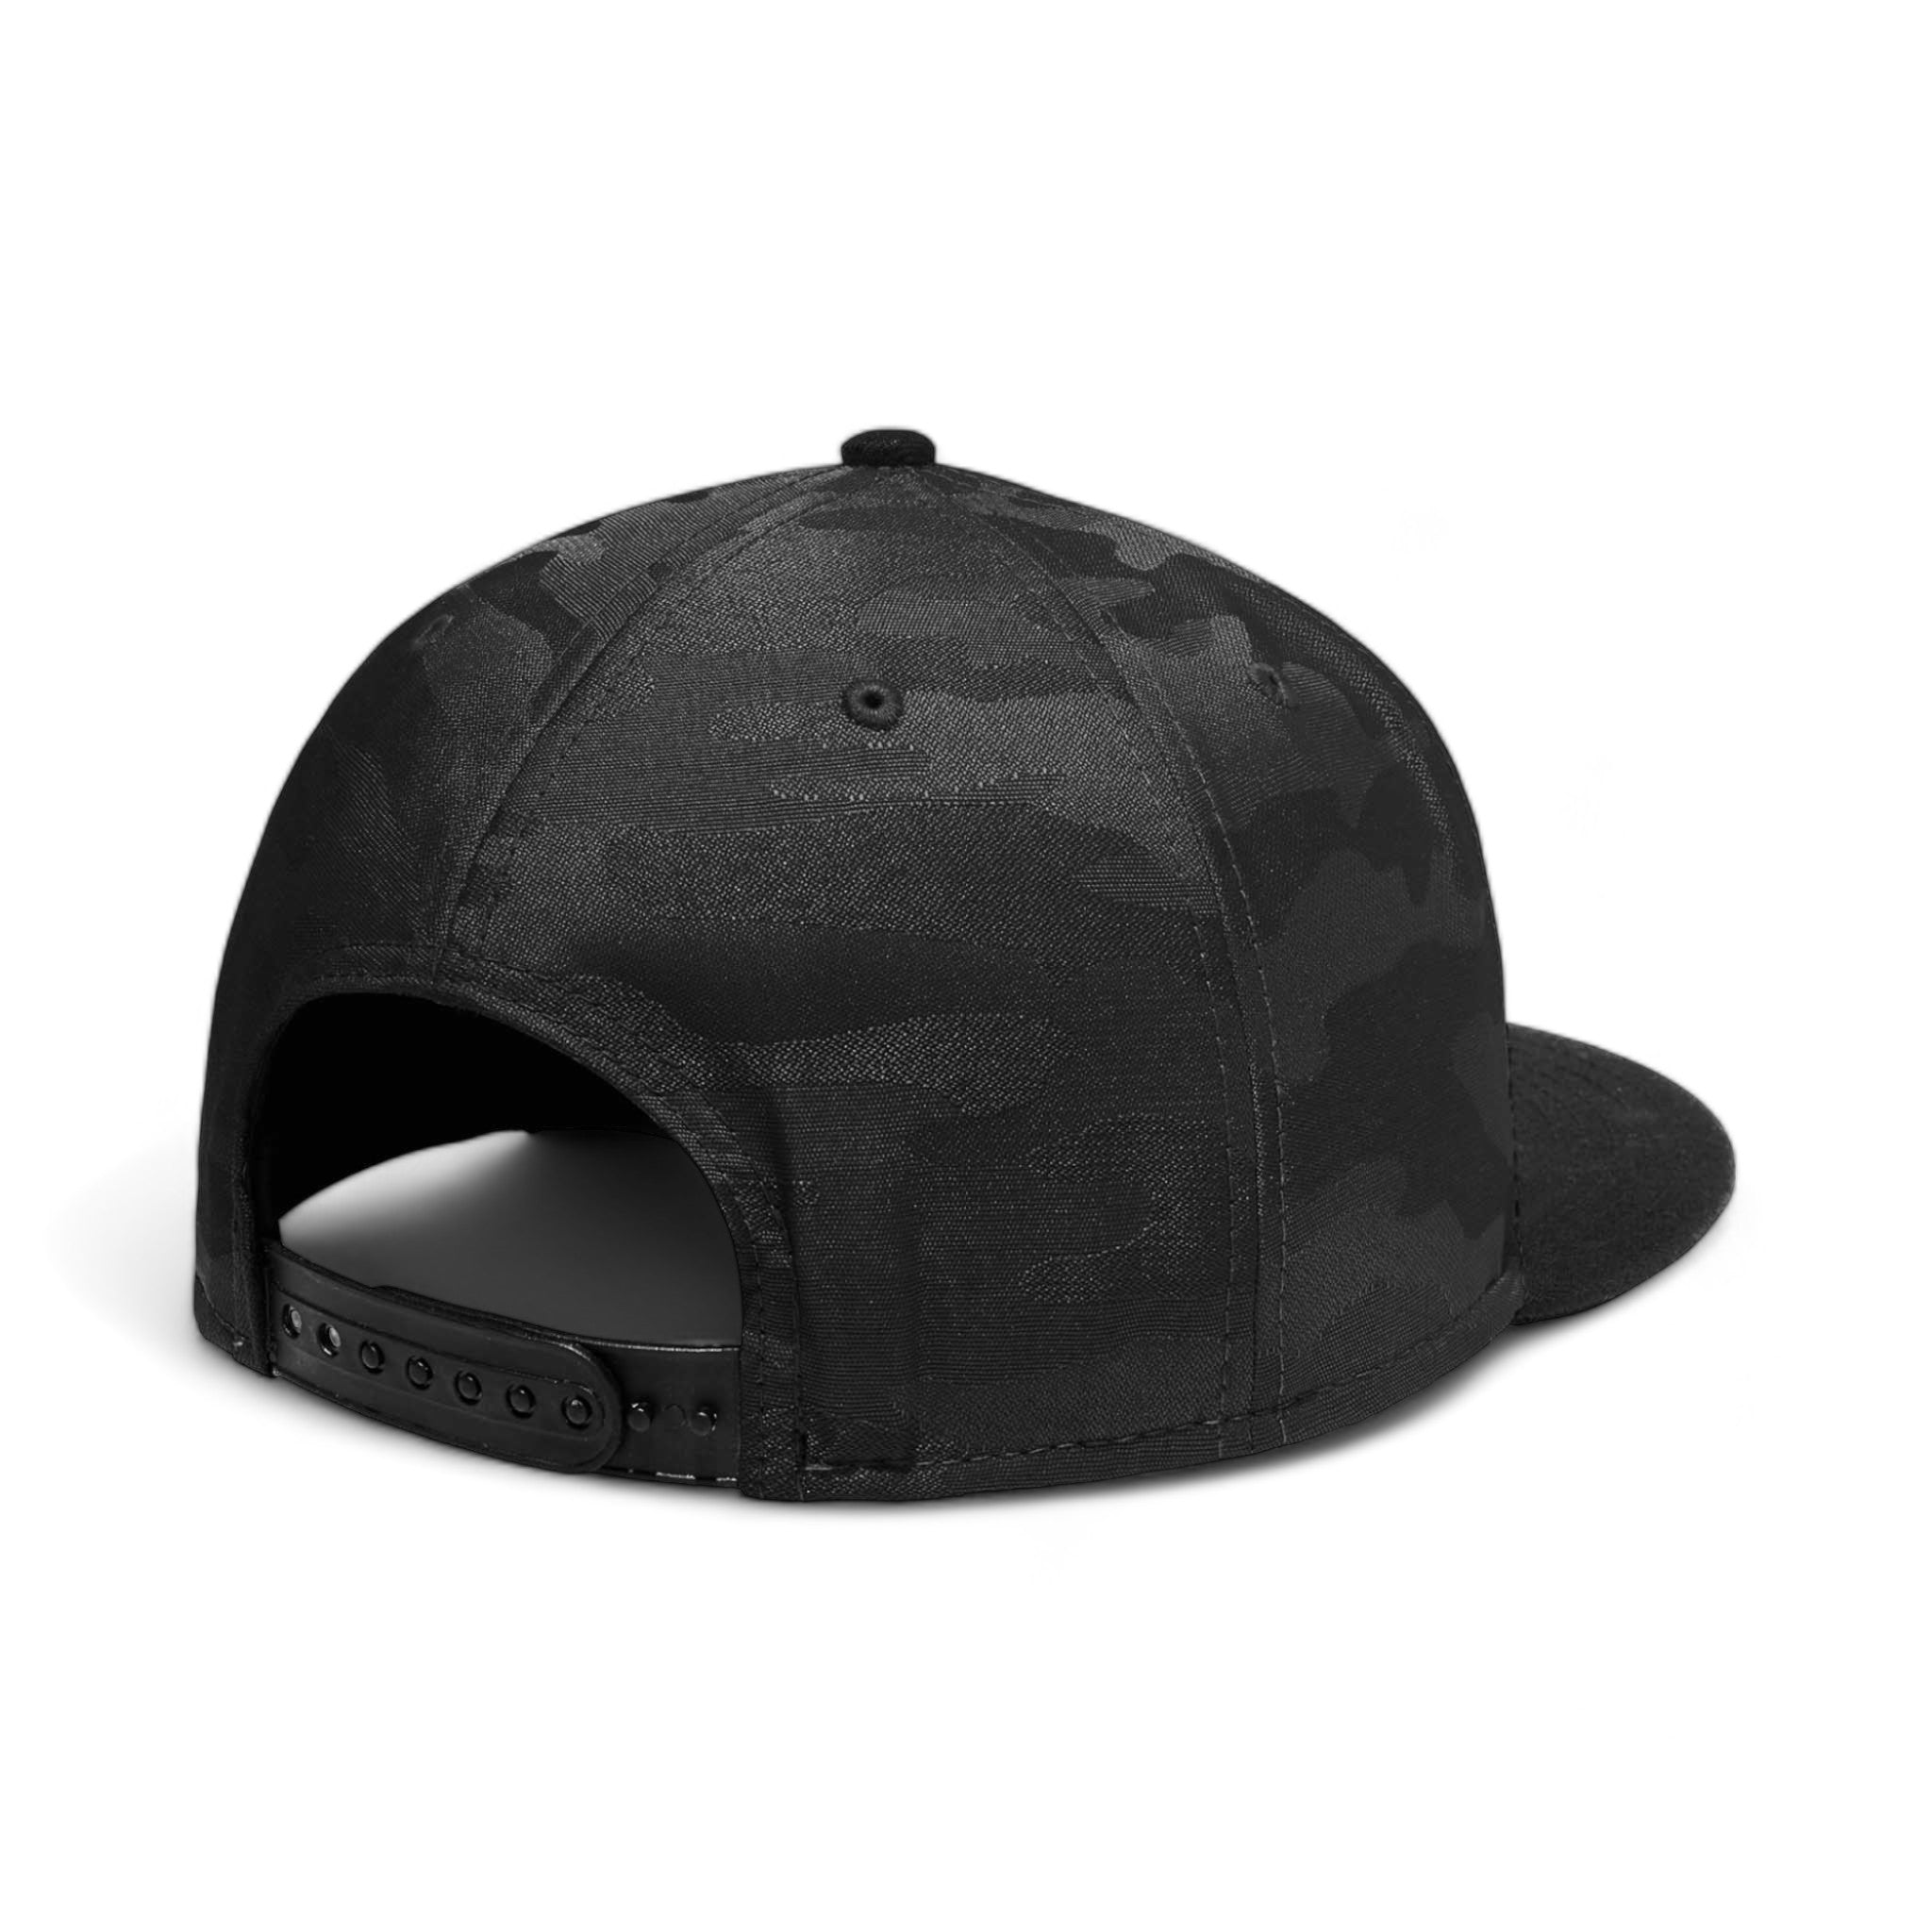 Back view of New Era NE407 custom hat in black and black camo